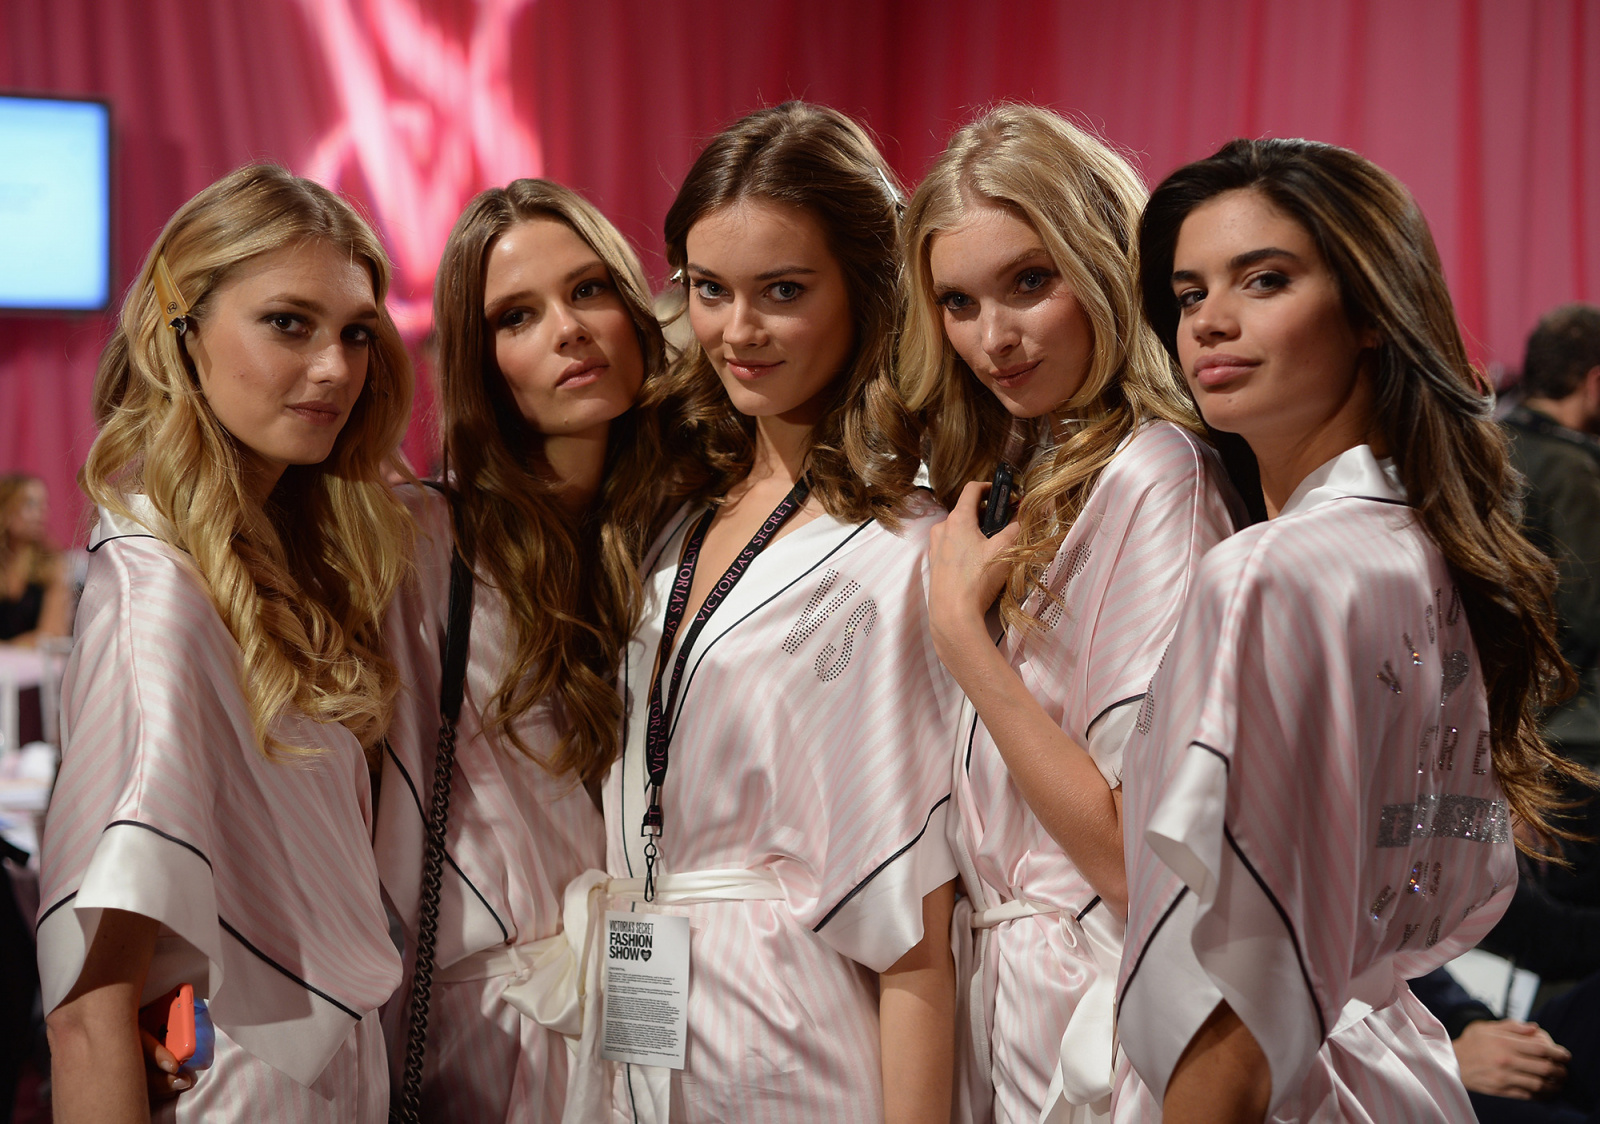 Martha Hunt, Caroline Brasch, Monika Jagaciak, Elsa Hosk, and Sara Sampaio za kulisami pokazu Victorias Secret Fashion w 2013 roku (Fot. Getty Images)